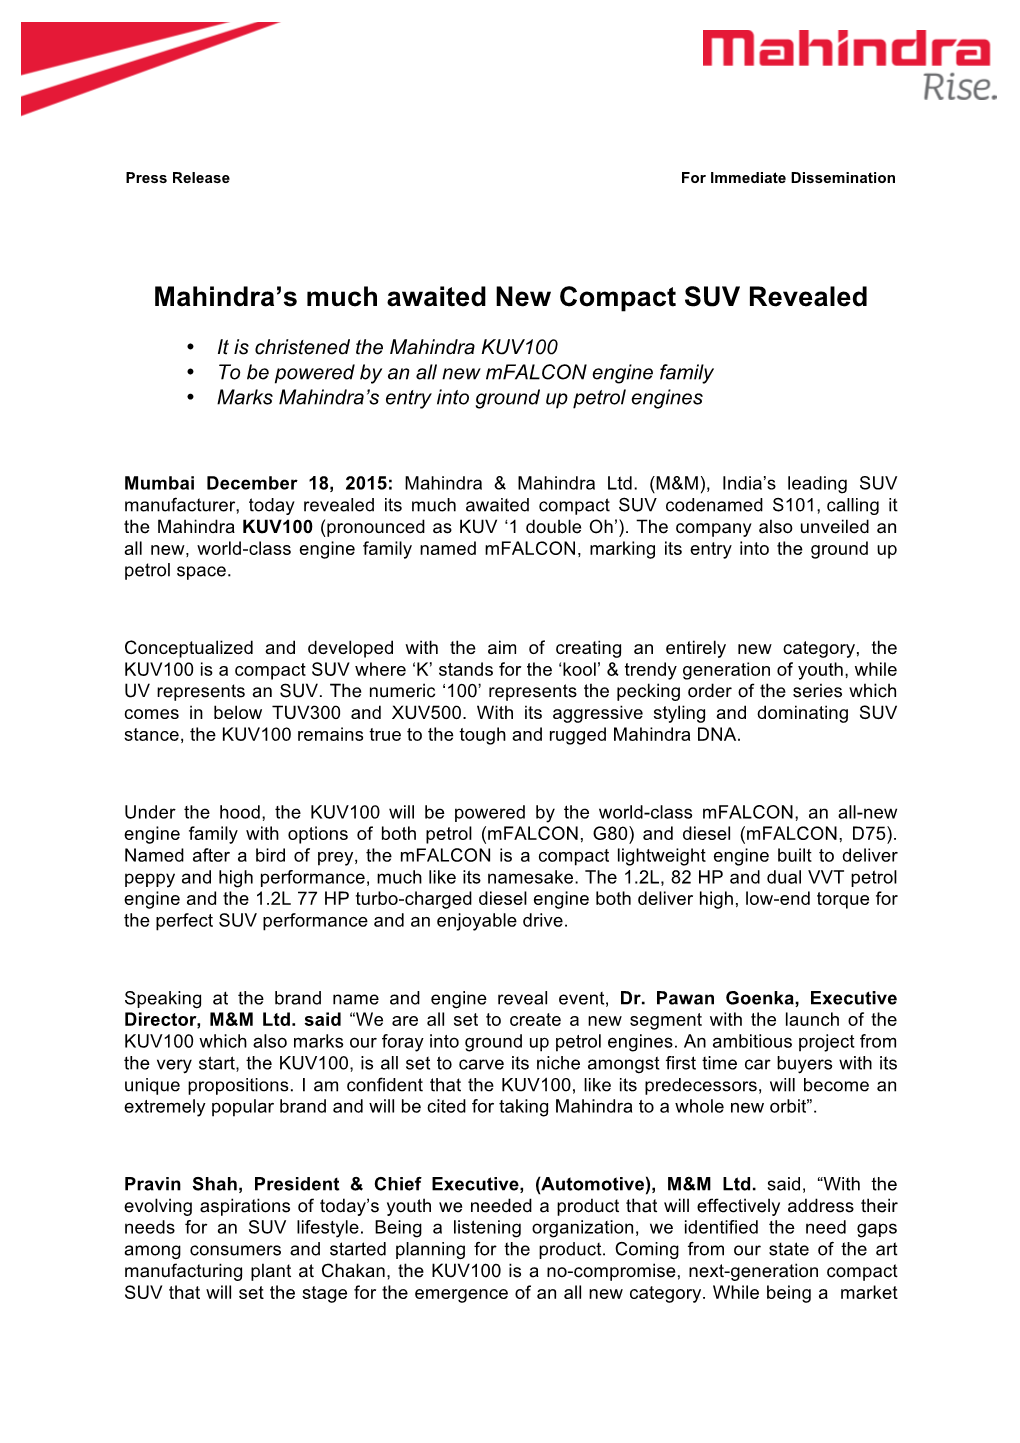 Mahindra's Much Awaited New Compact